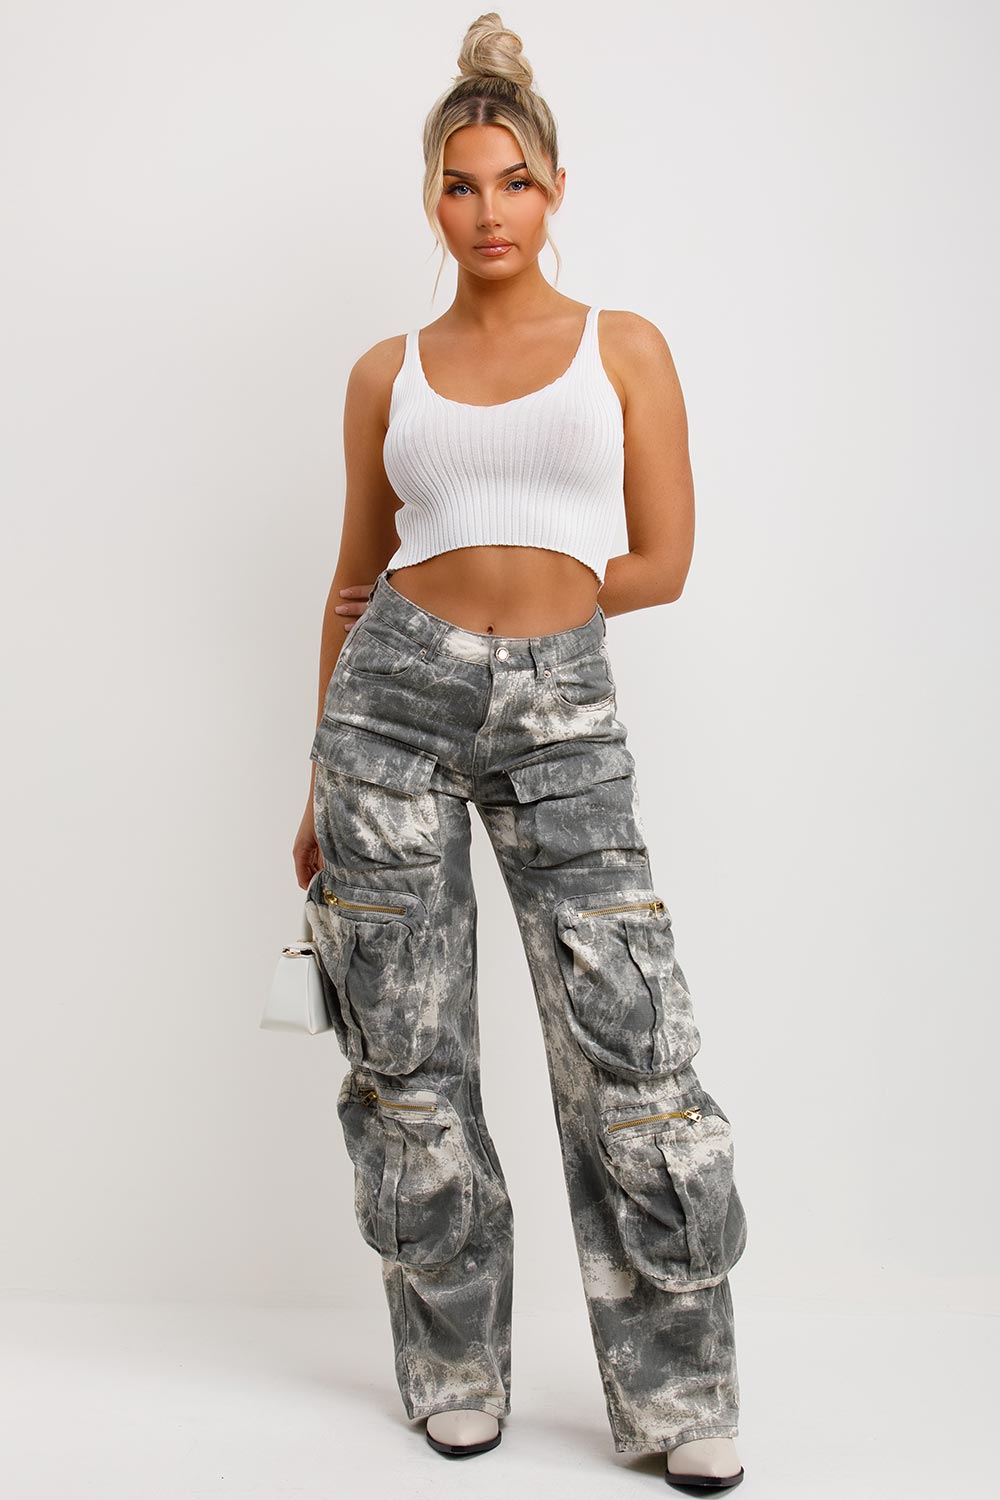 grey camo cargo jeans with pockets womens